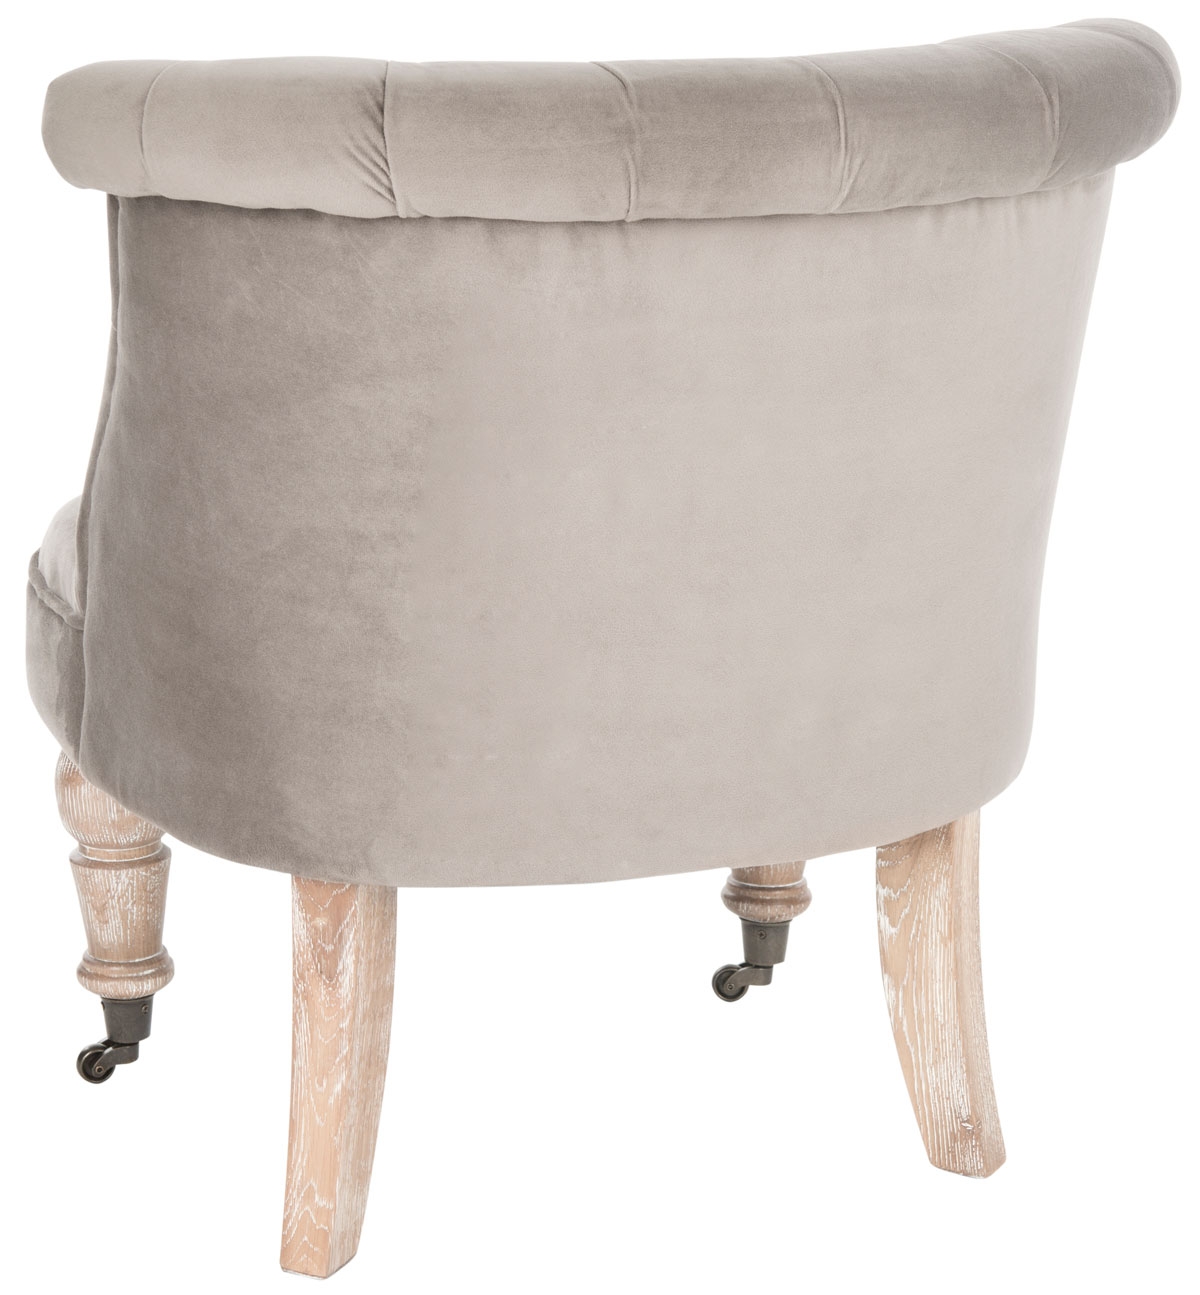 Carlin Tufted Chair - Mushroom Taupe/White Wash - Arlo Home - Image 2